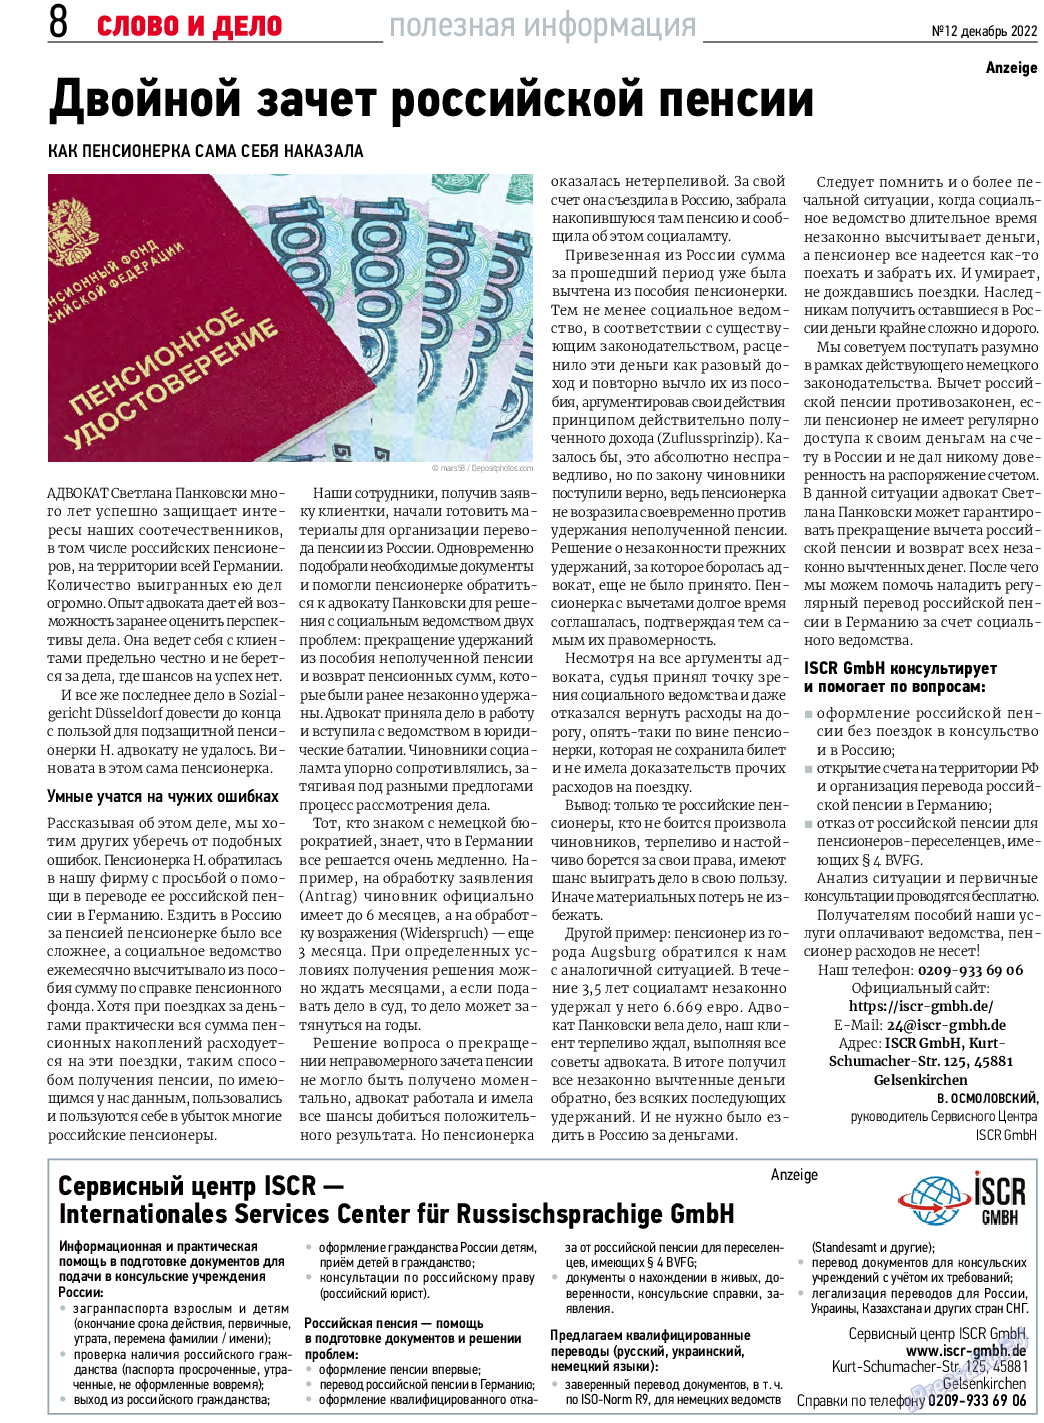 Телеграф NRW, газета. 2022 №12 стр.8